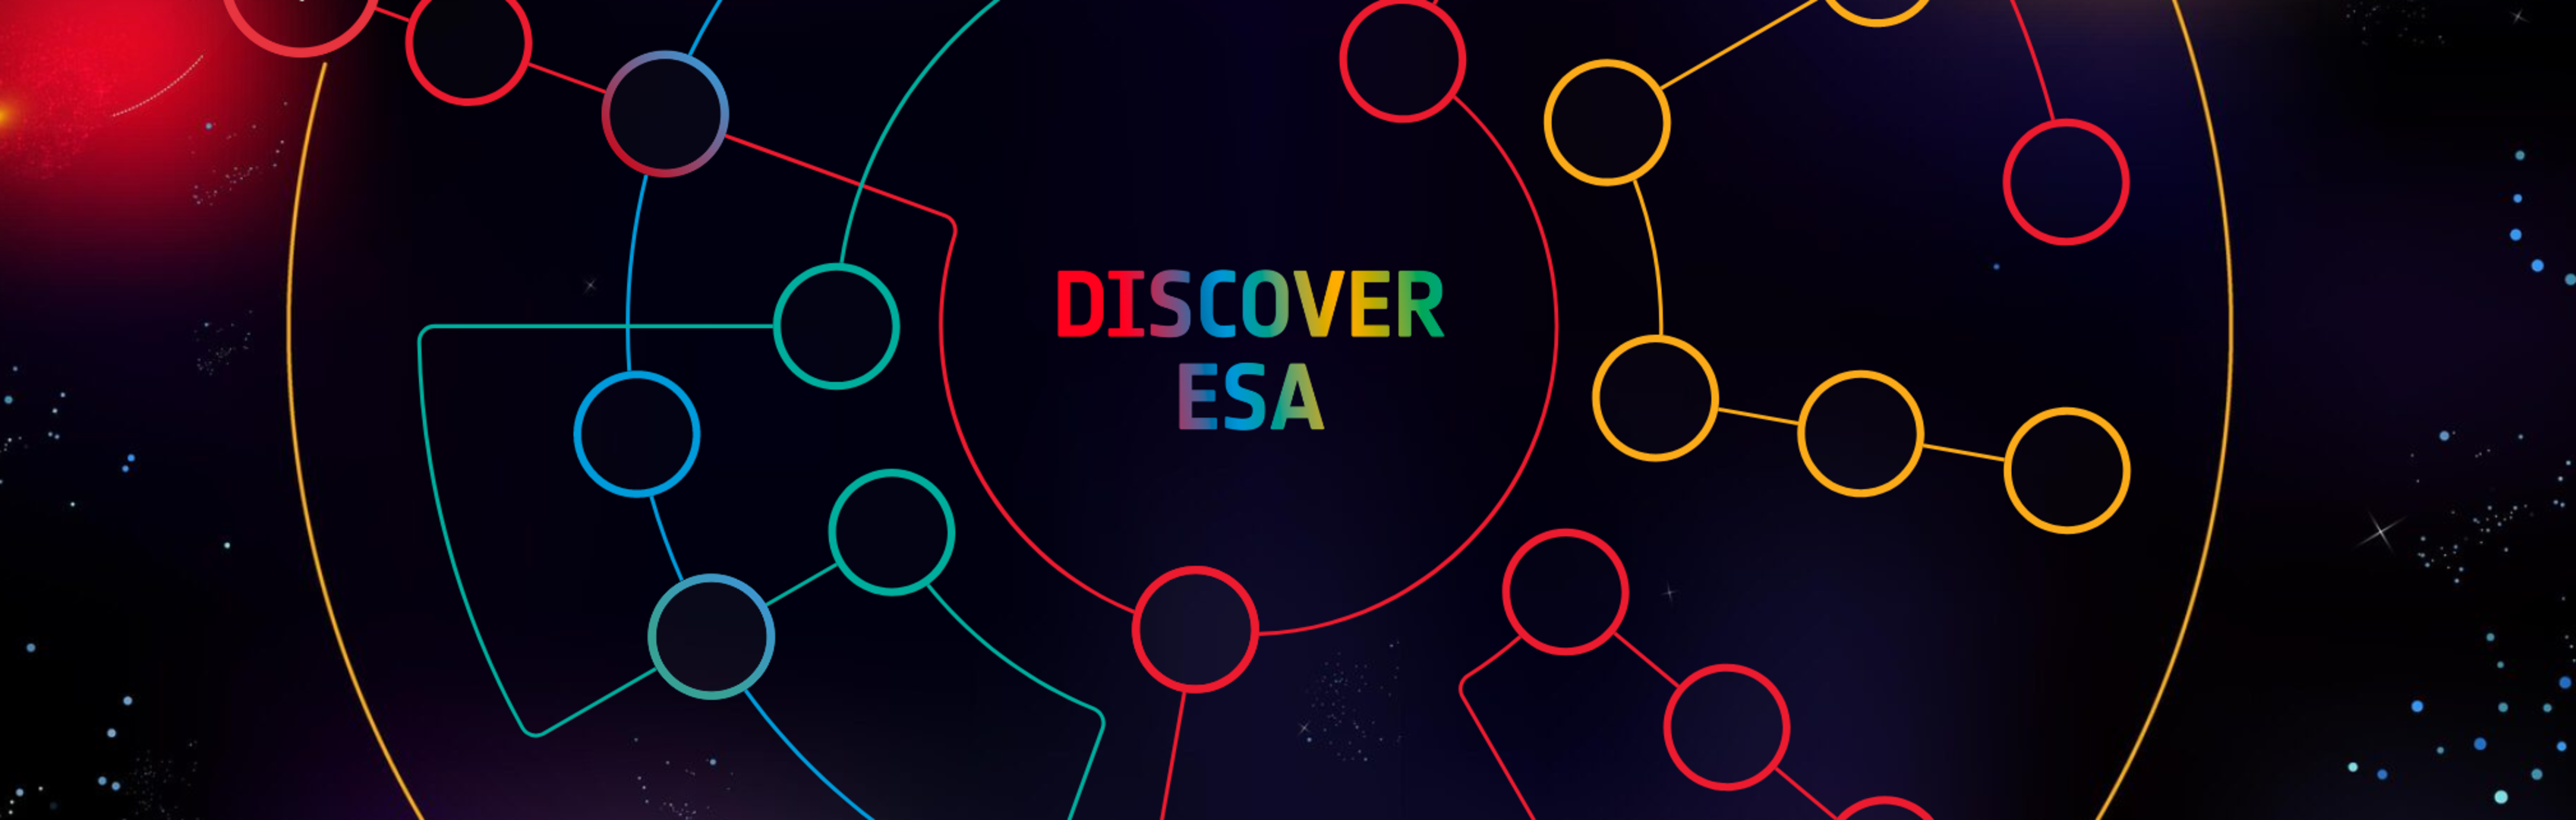 DiscoverESA cover image